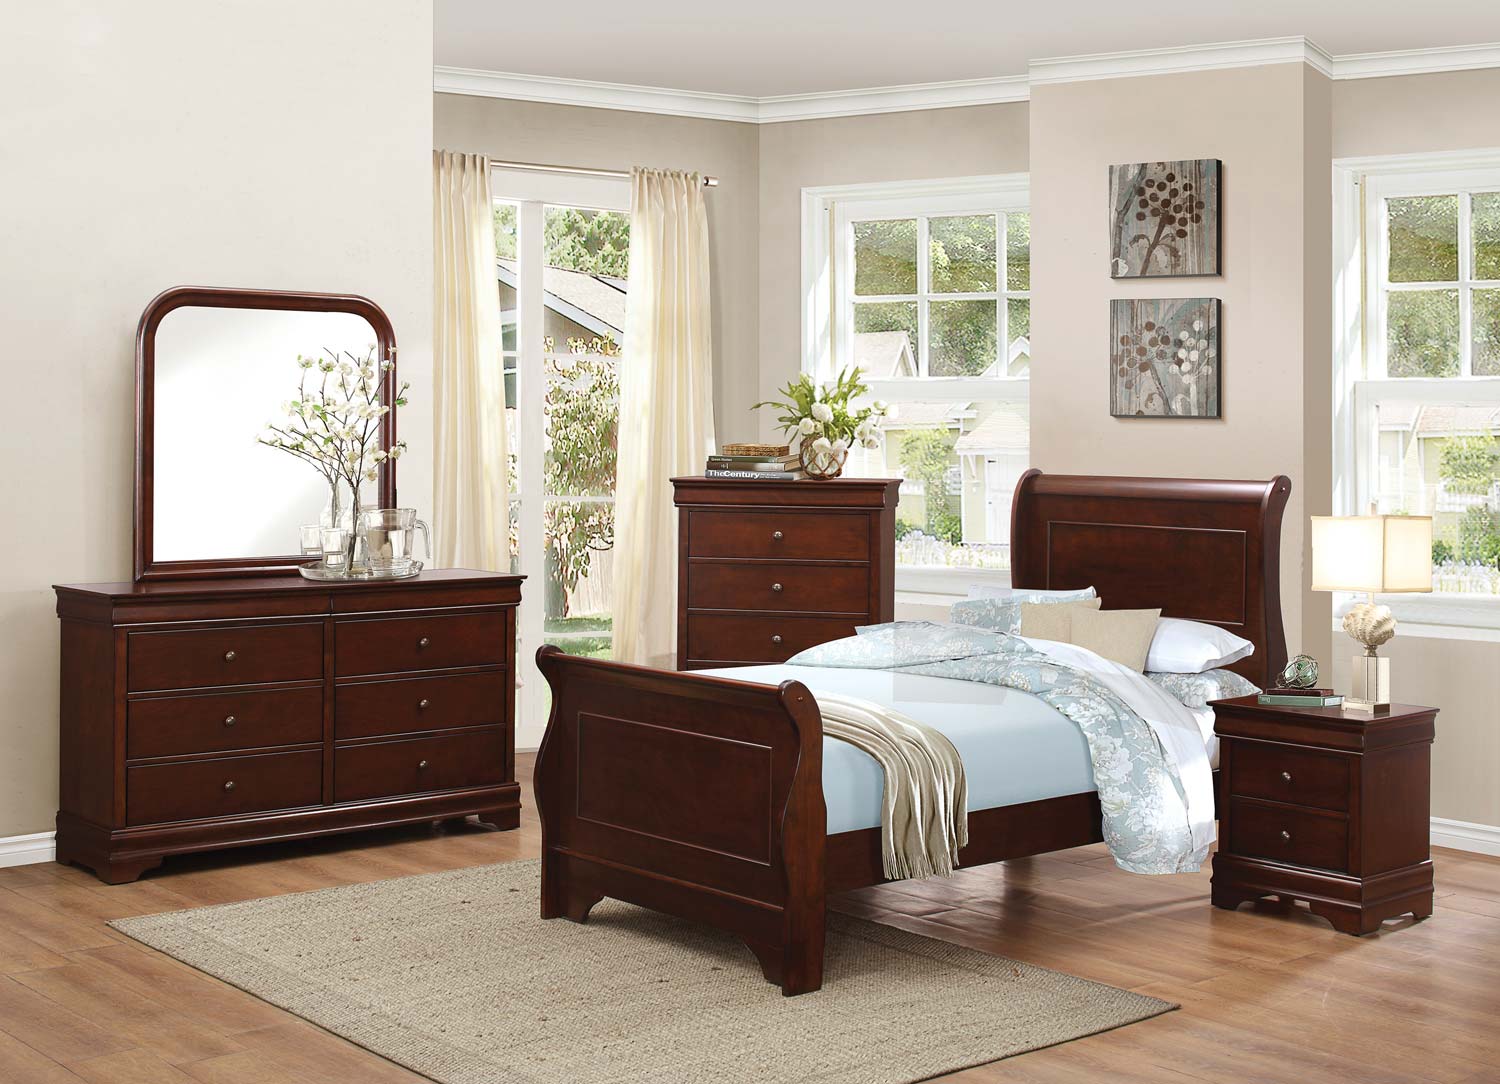 louis bedroom furniture sale